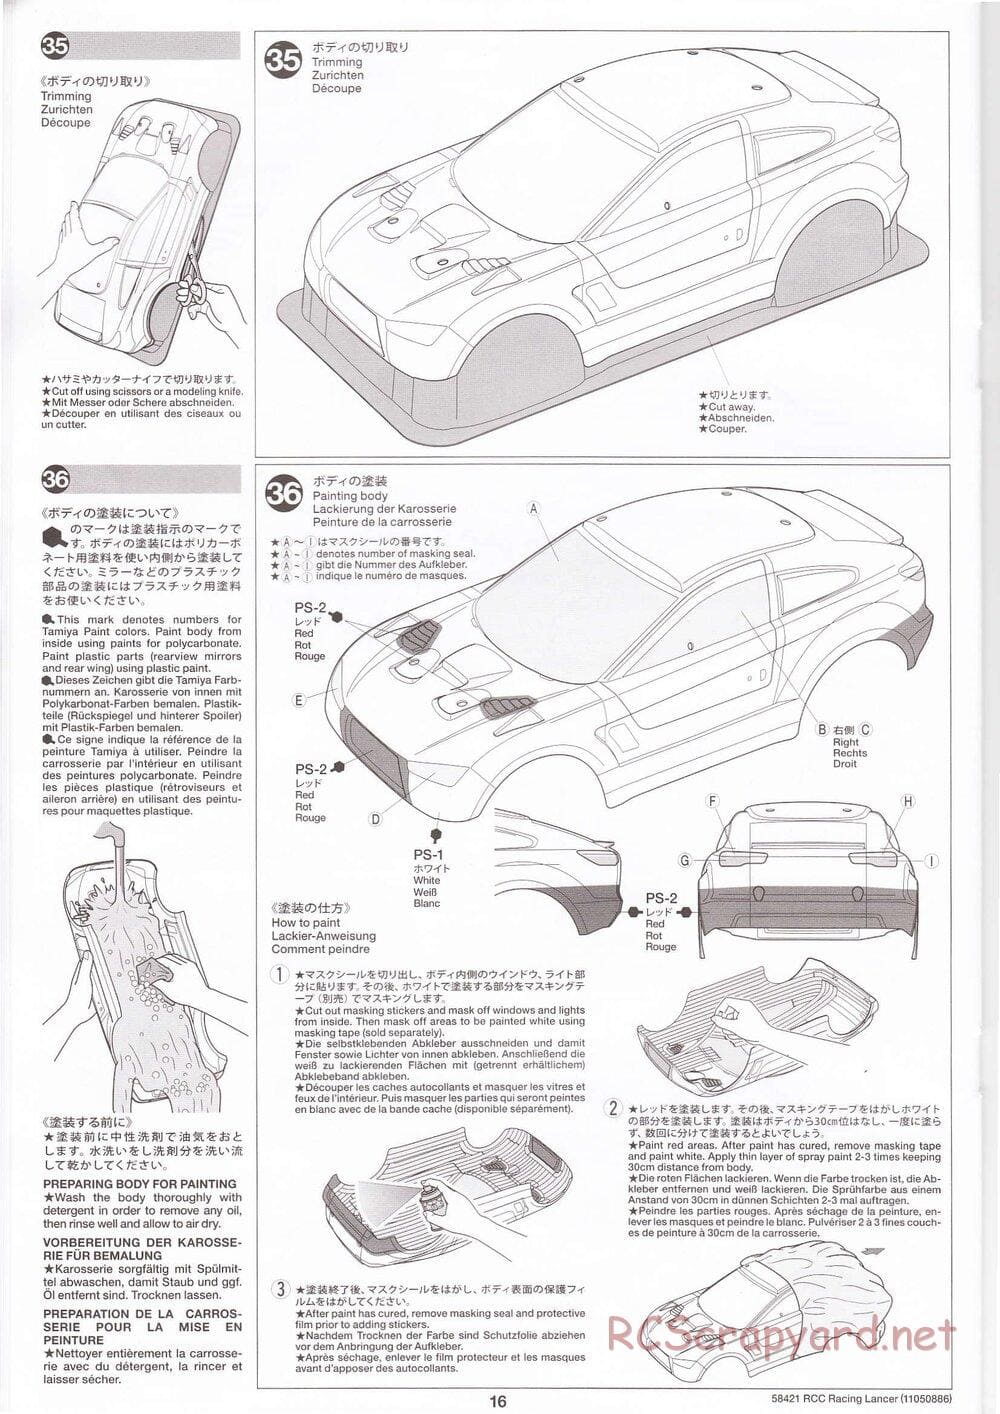 Tamiya - Mitsubishi Racing Lancer - DF-01 Chassis - Manual - Page 16